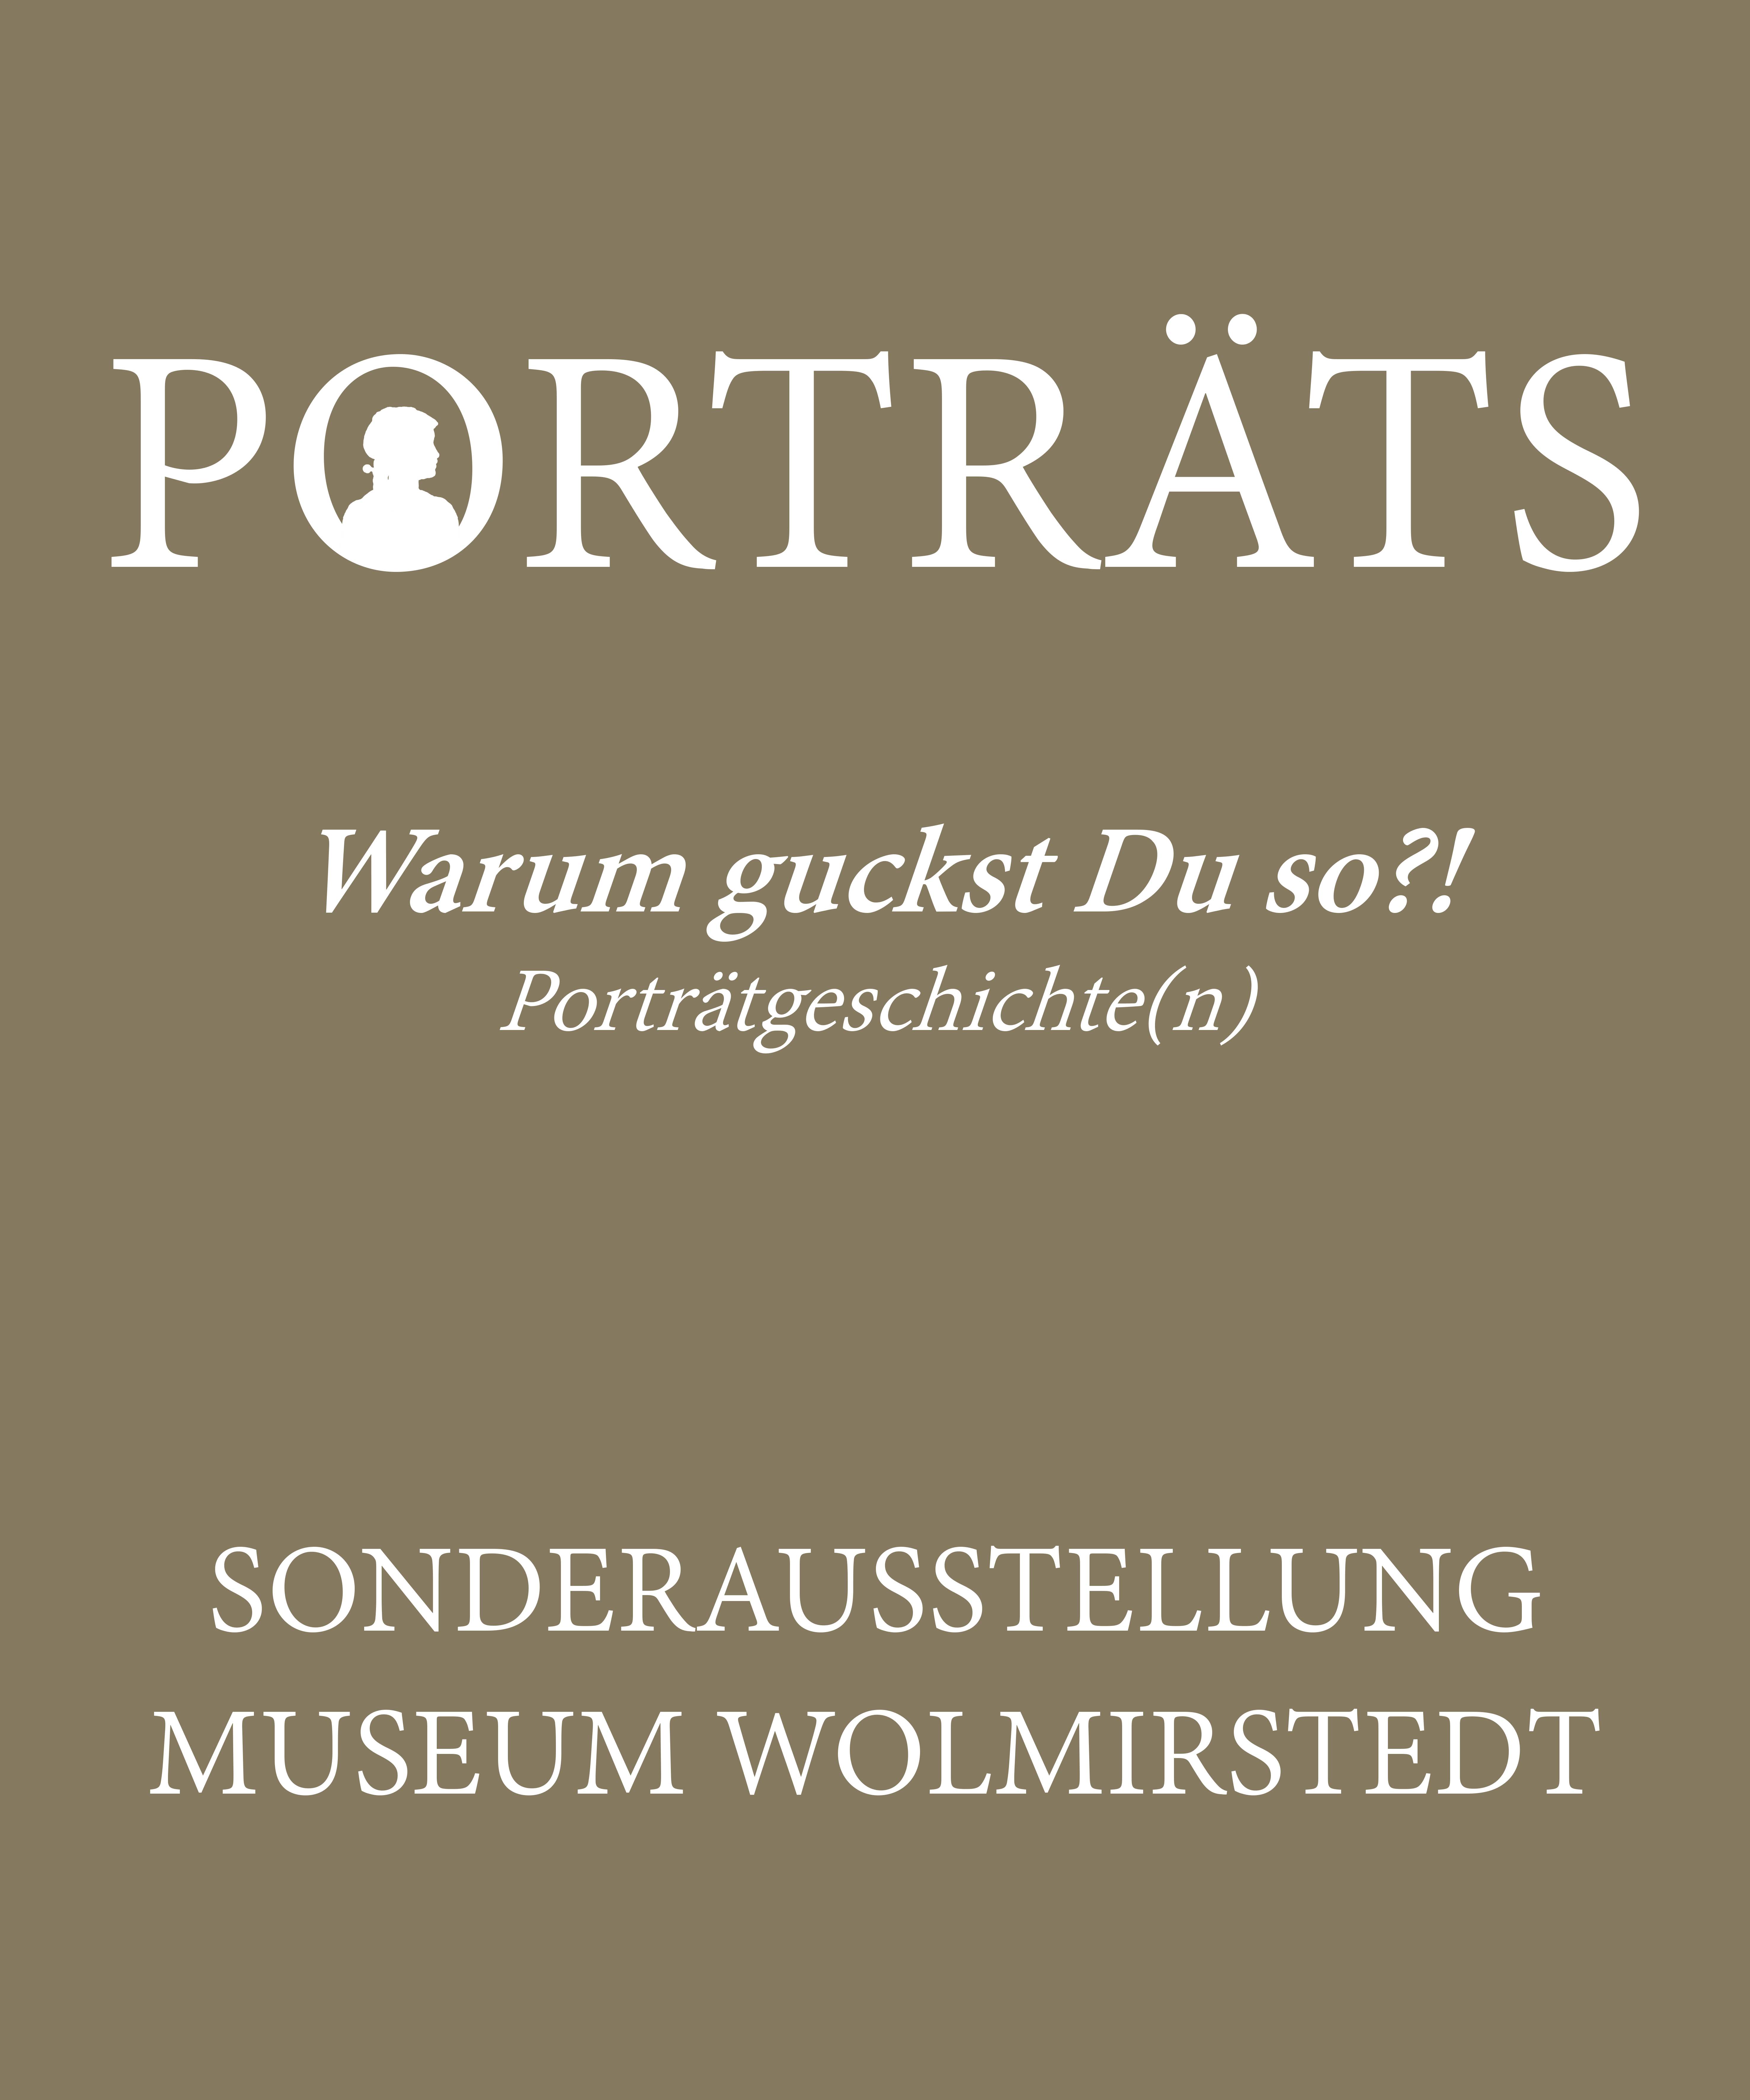 Ausstellungsplakat Sonderausstellung "PORTRÄTS. Warum guckst du so?! Poträtgeschichte(n)" (Museum Wolmirstedt RR-F)